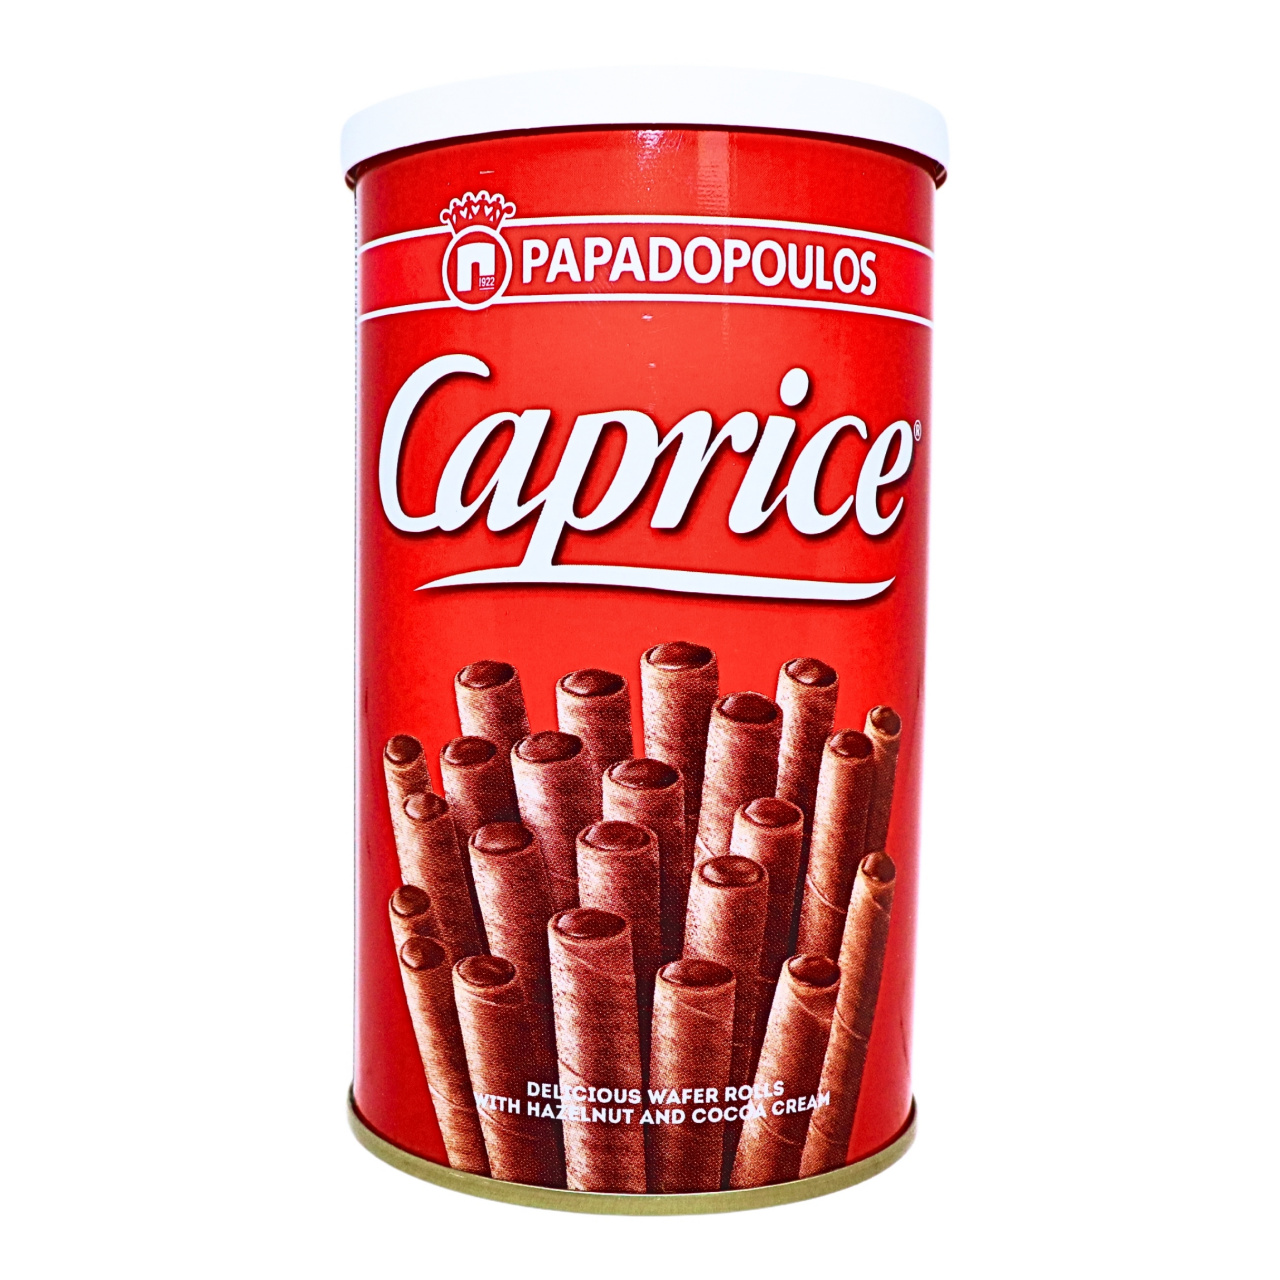 Napolitane rulouri cu alune si cacao Caprice 115 g Engros